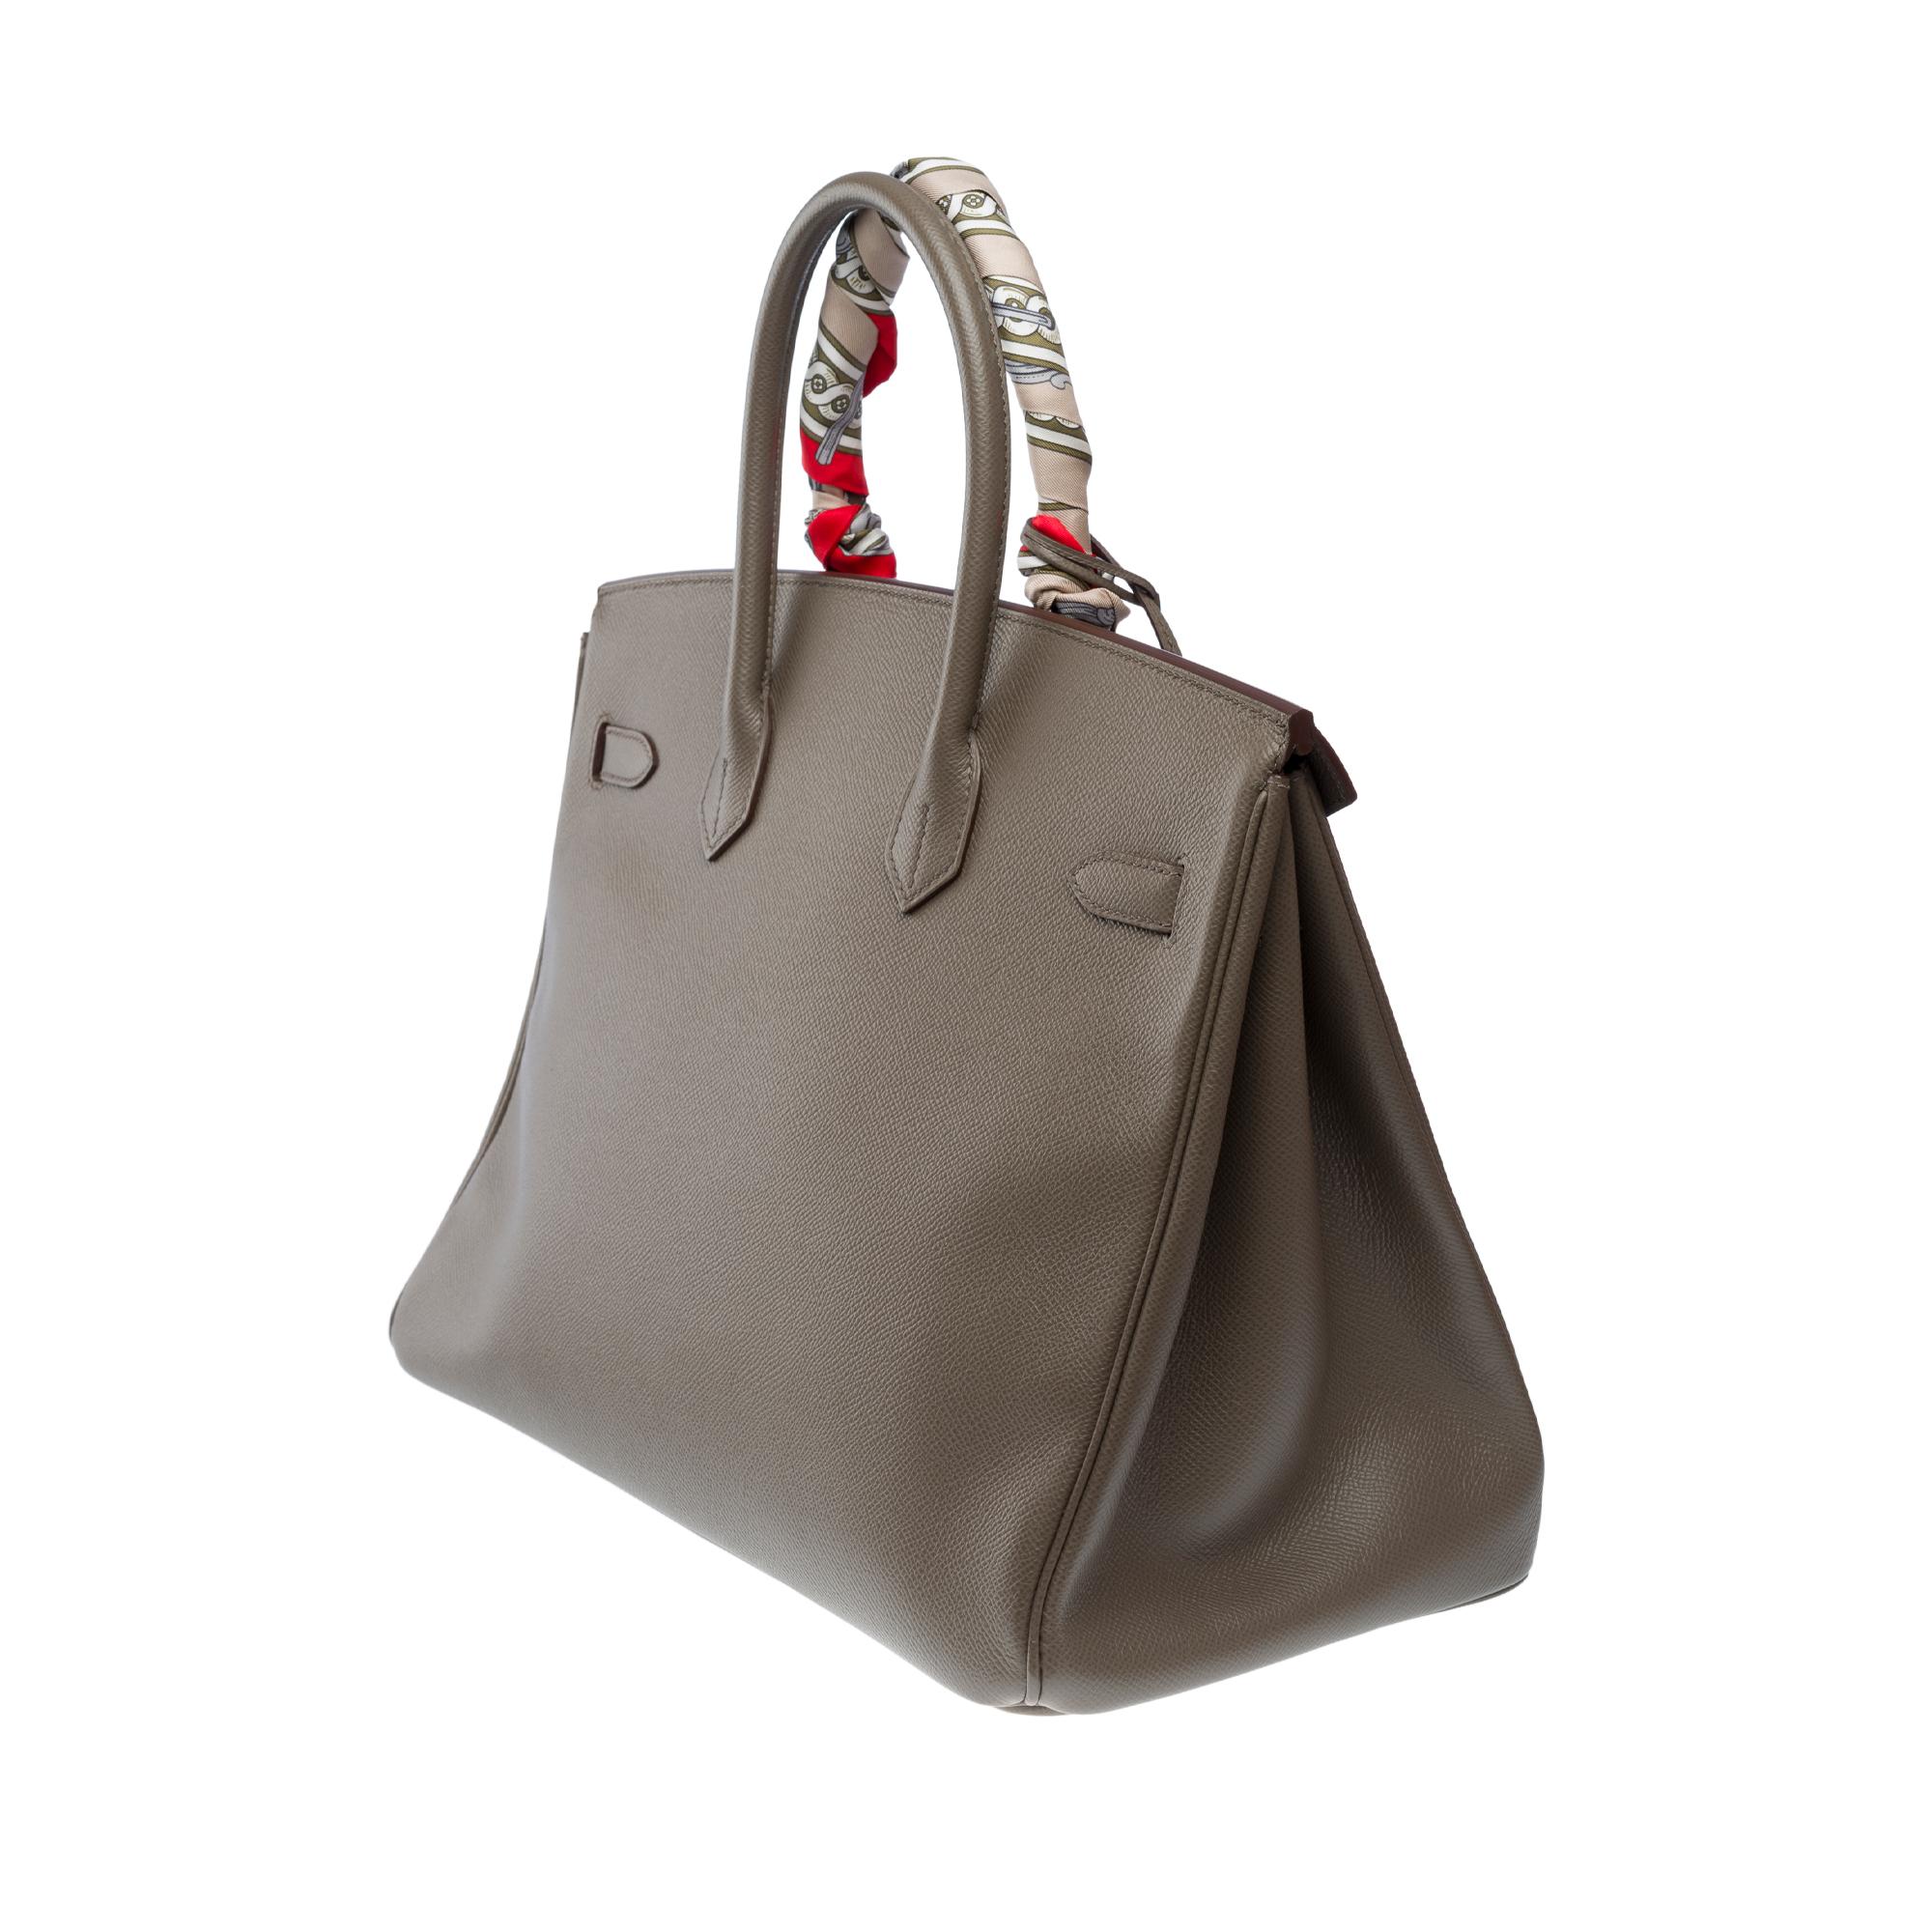 Stunning Hermès Birkin 35 handbag in etoupe Epsom leather, RGHW For Sale 2